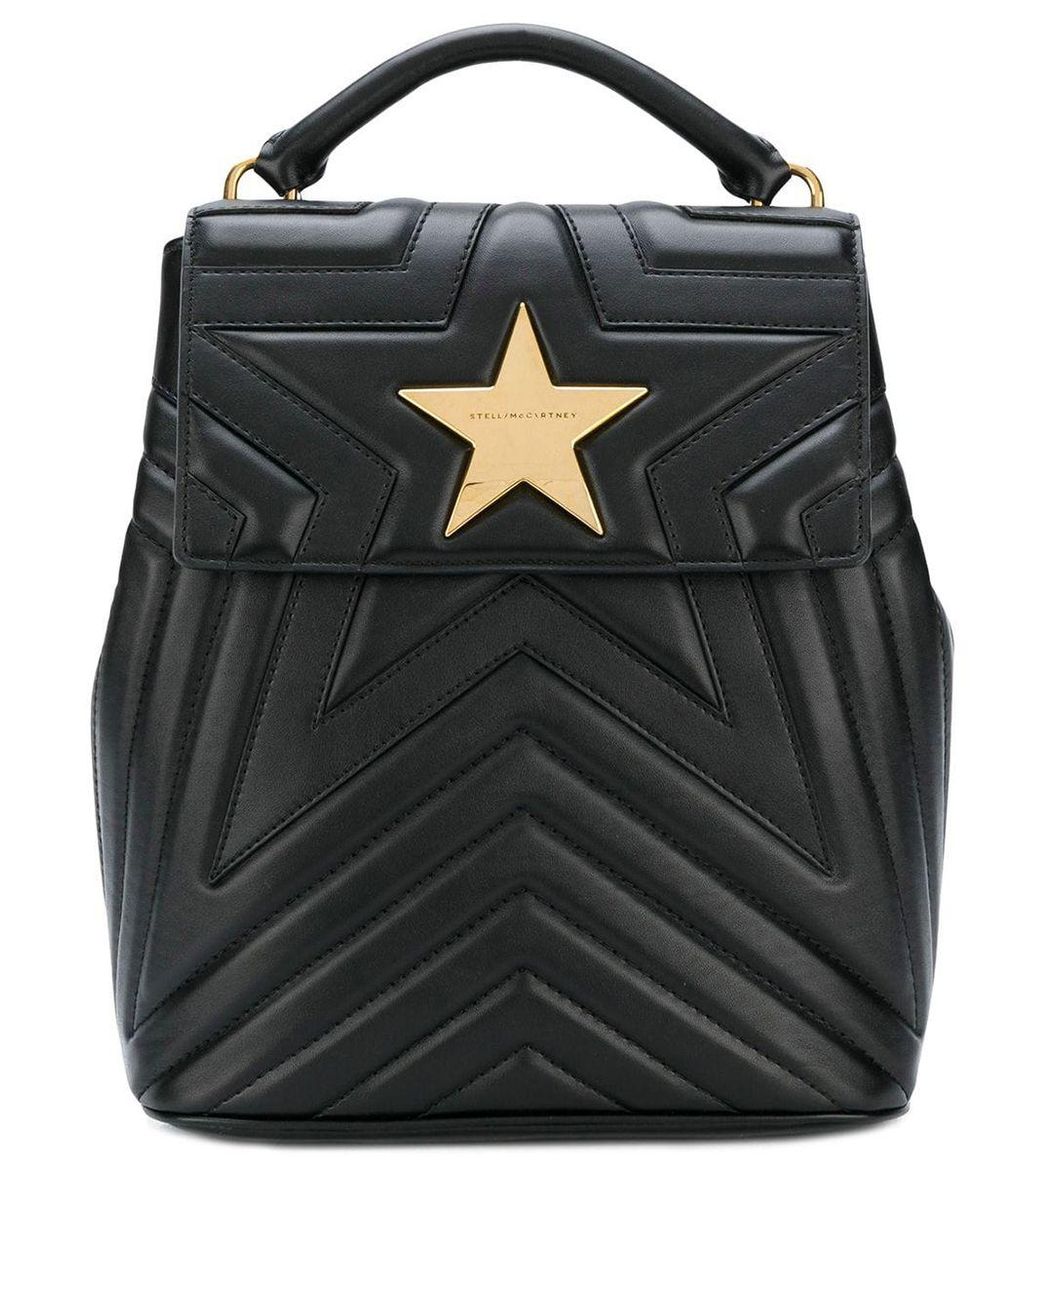 Stella McCartney Stella Star Backpack in Black | Lyst